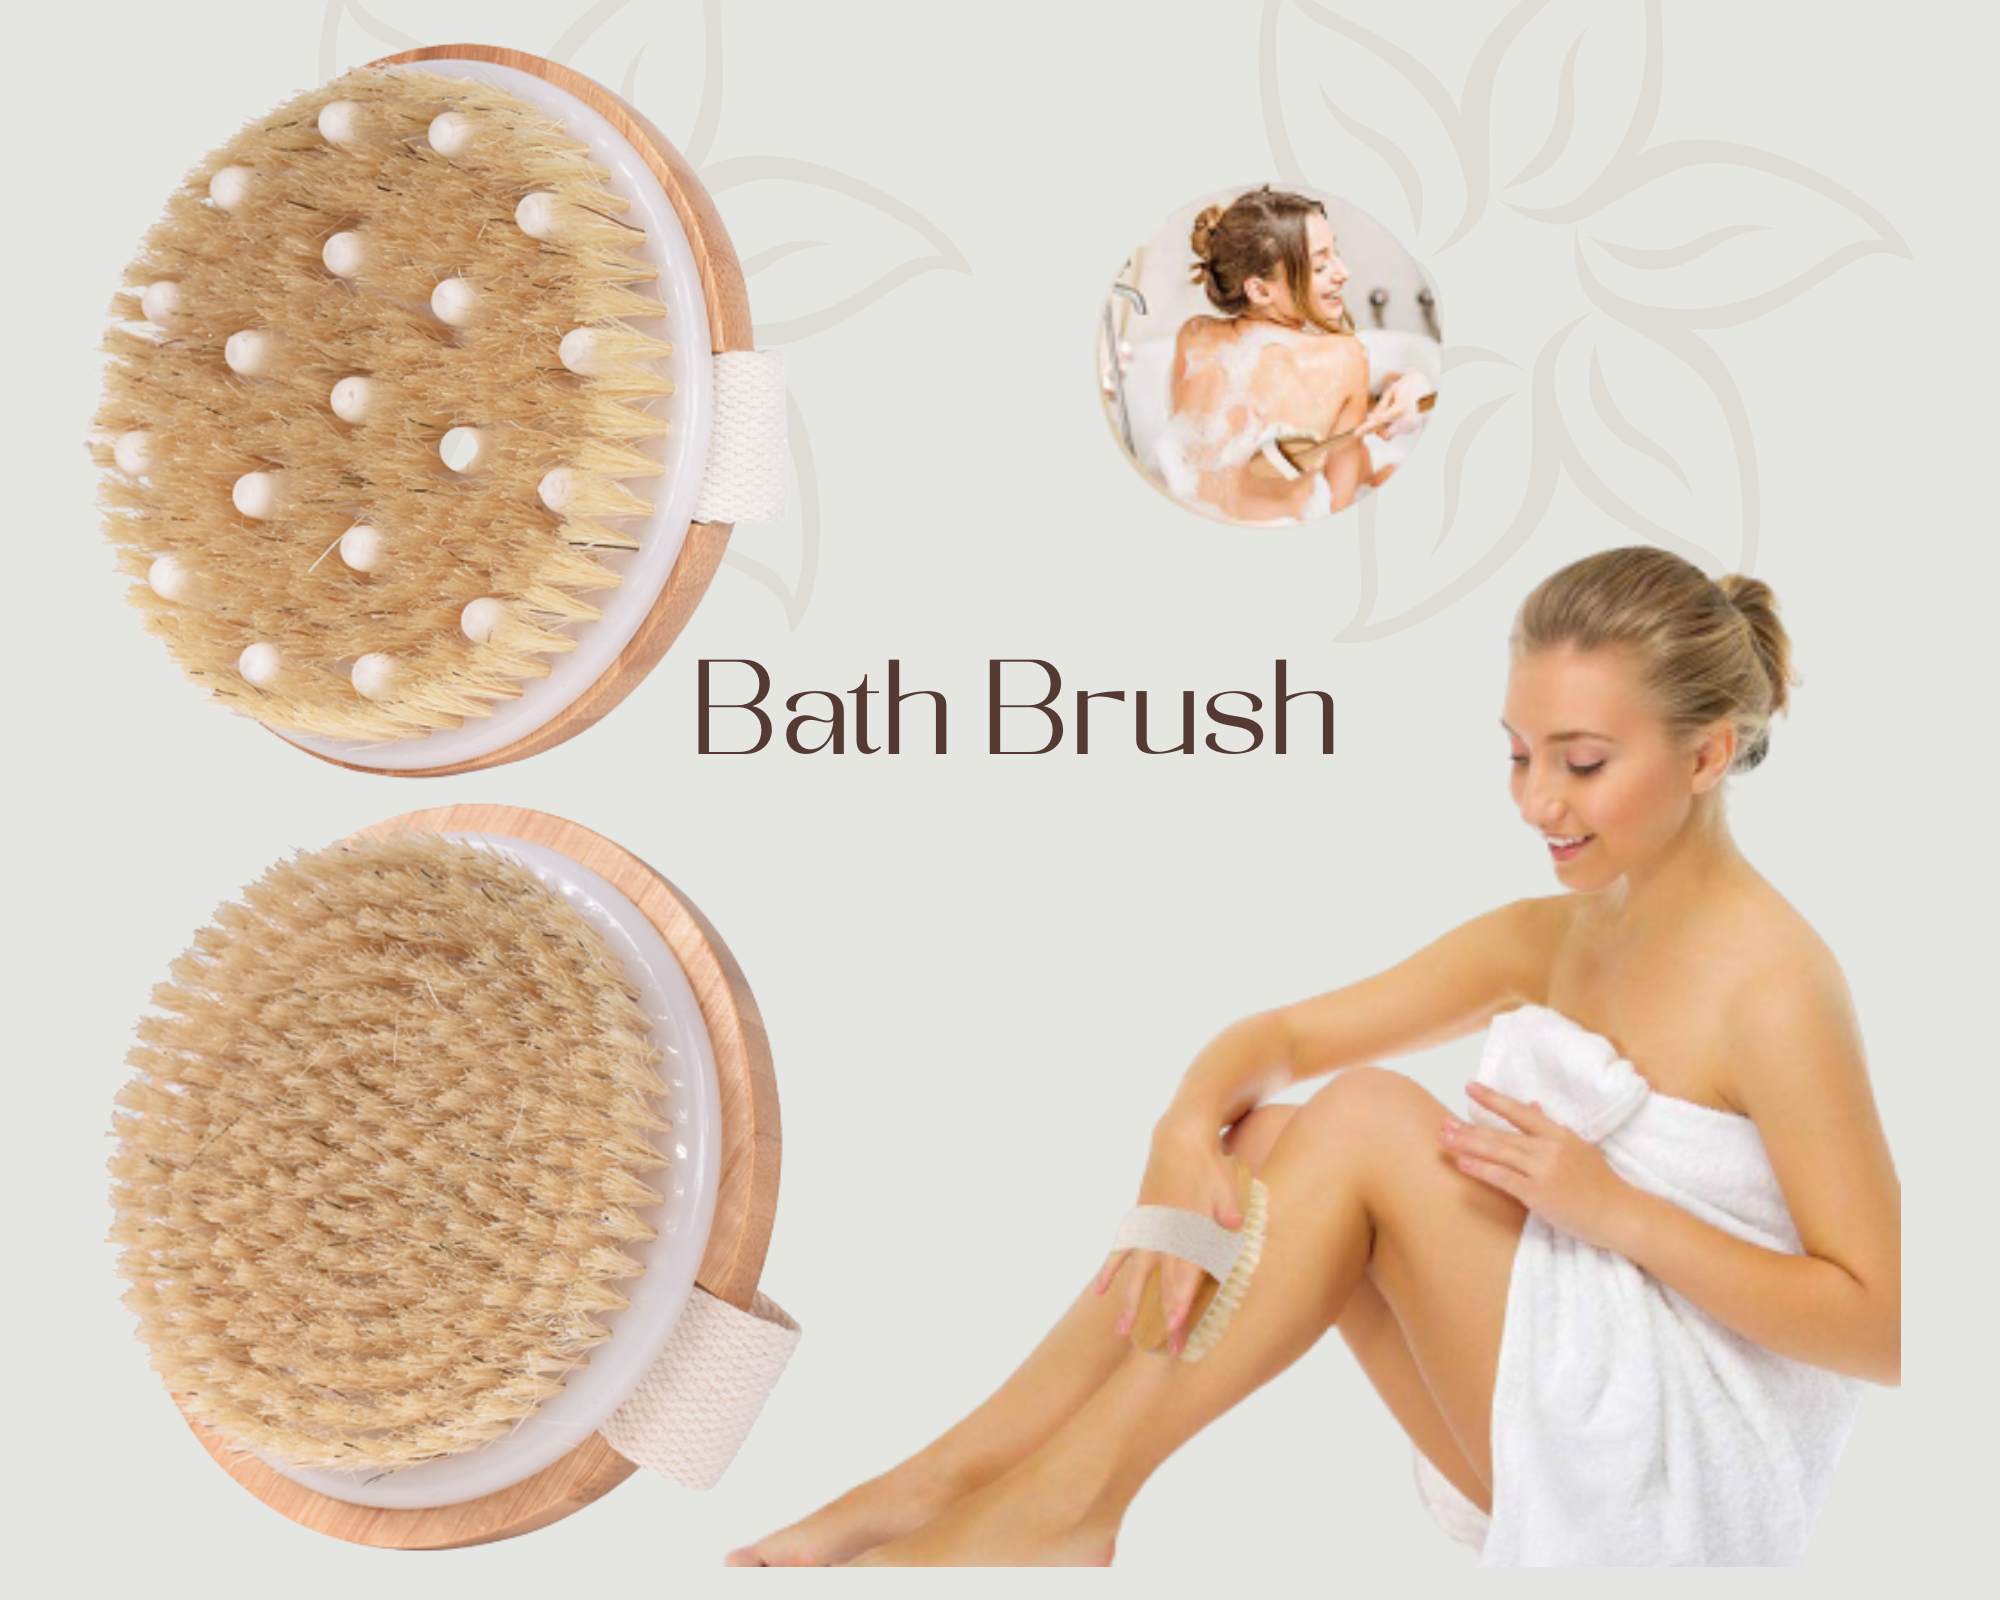 How to use Bath Brush? 